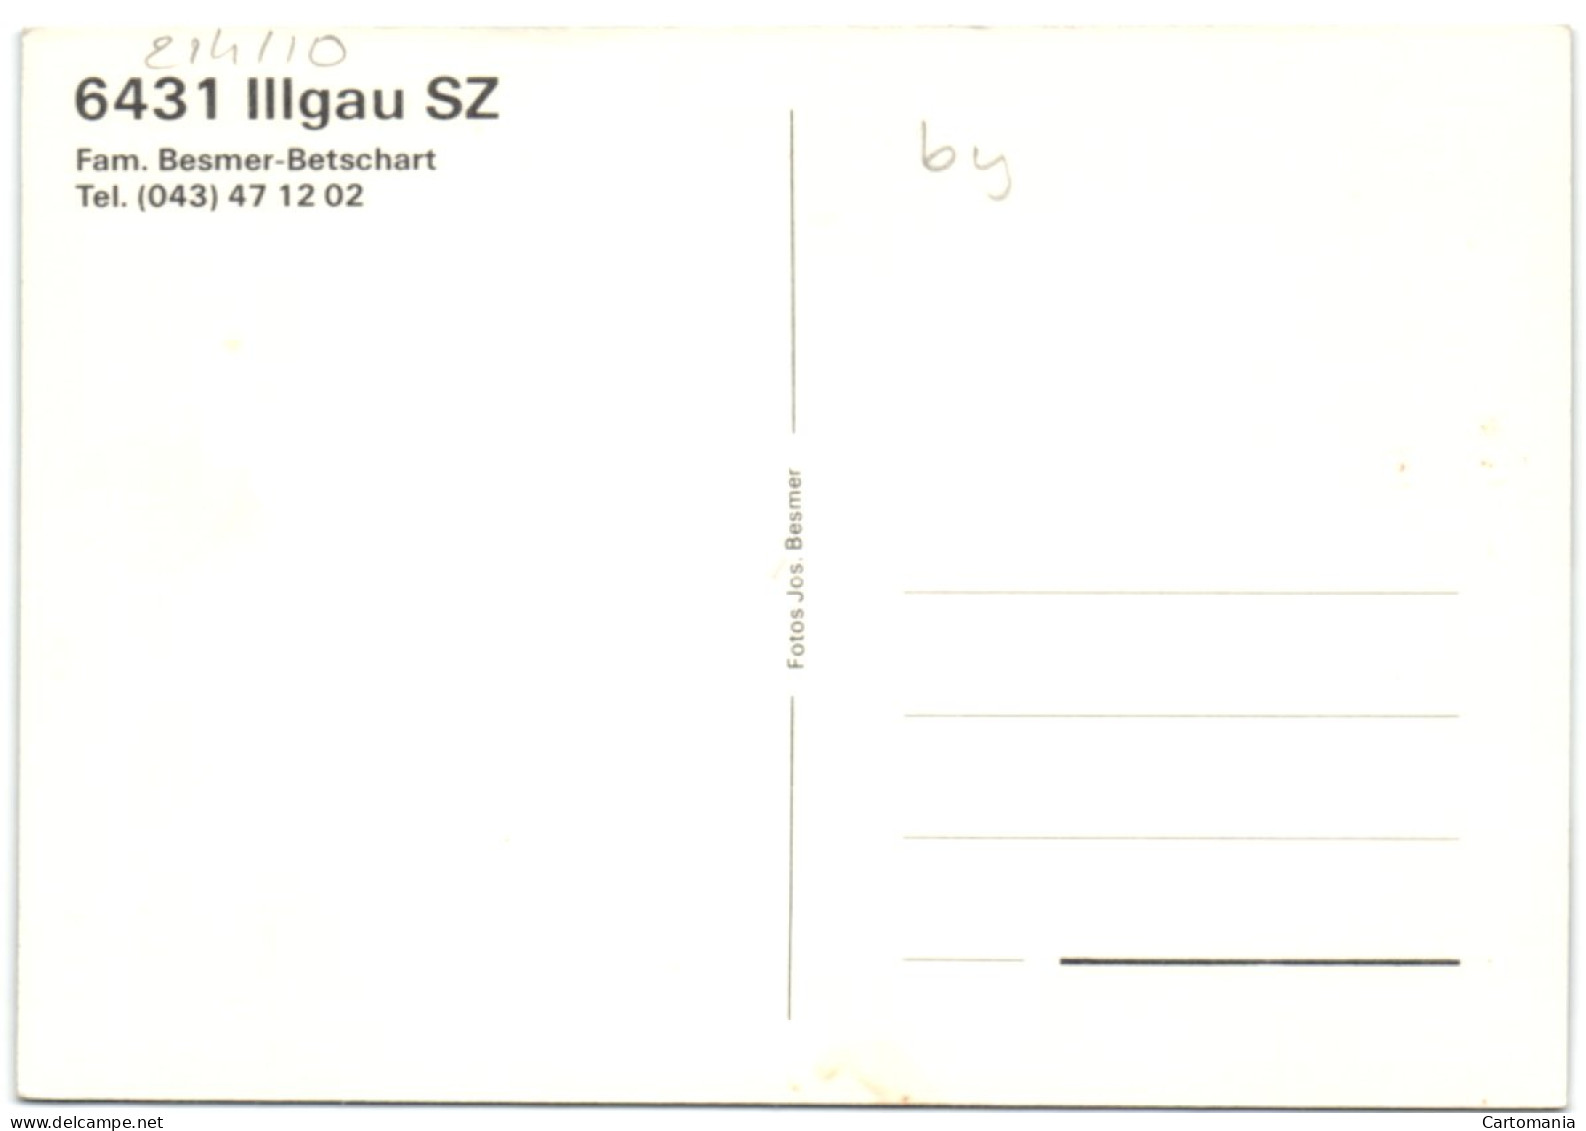 Illgau SZ - Fam. Besmer-Betschart - Illgau